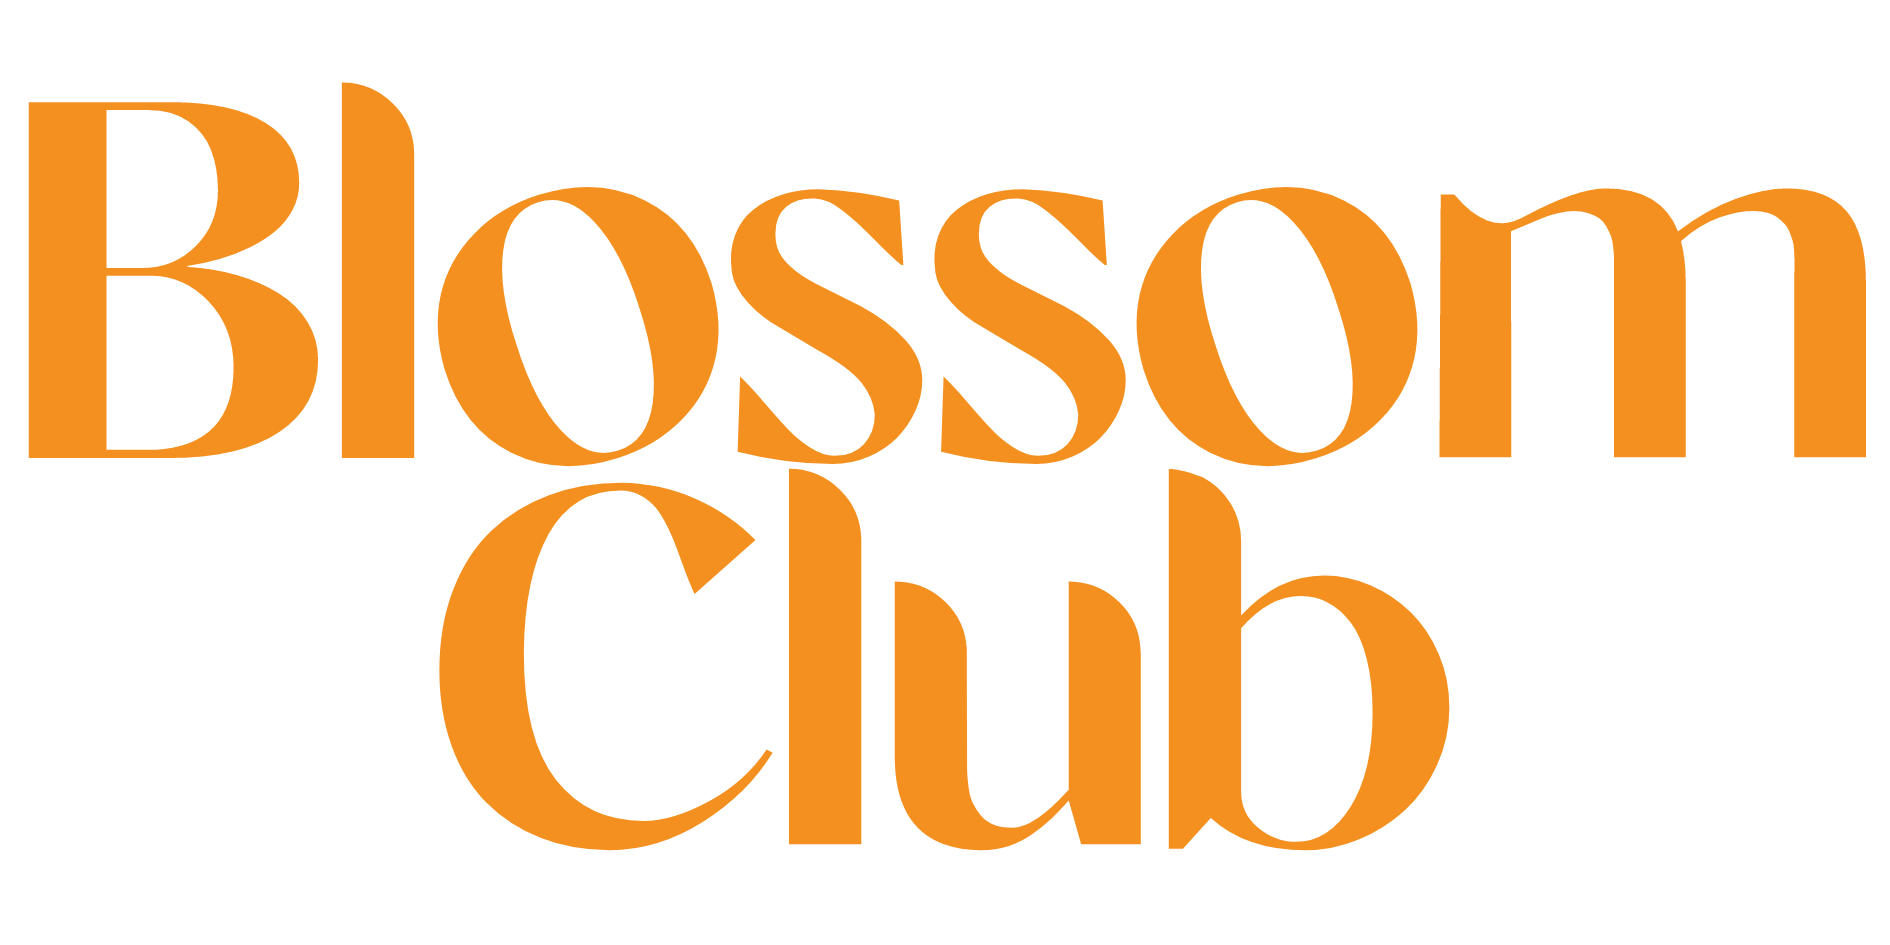 BLOSSOM CLUB – Blossom Club Aus